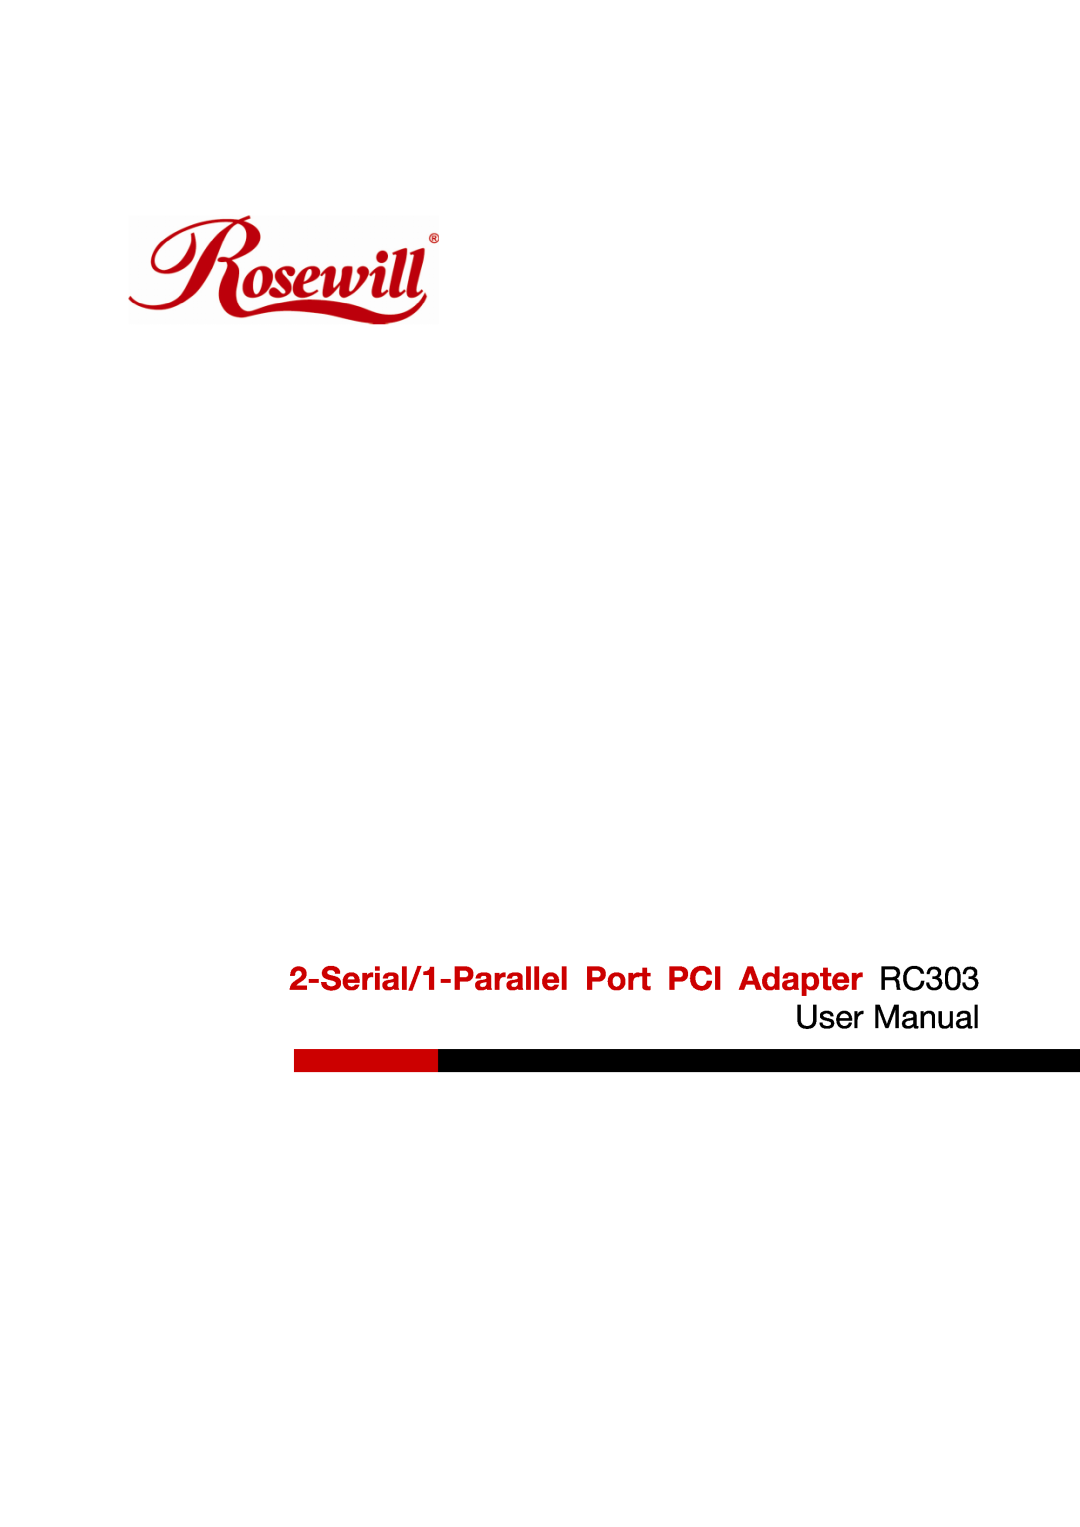 Rosewill RC-303 user manual Serial/1-Parallel Port PCI Adapter RC303, User Manual 